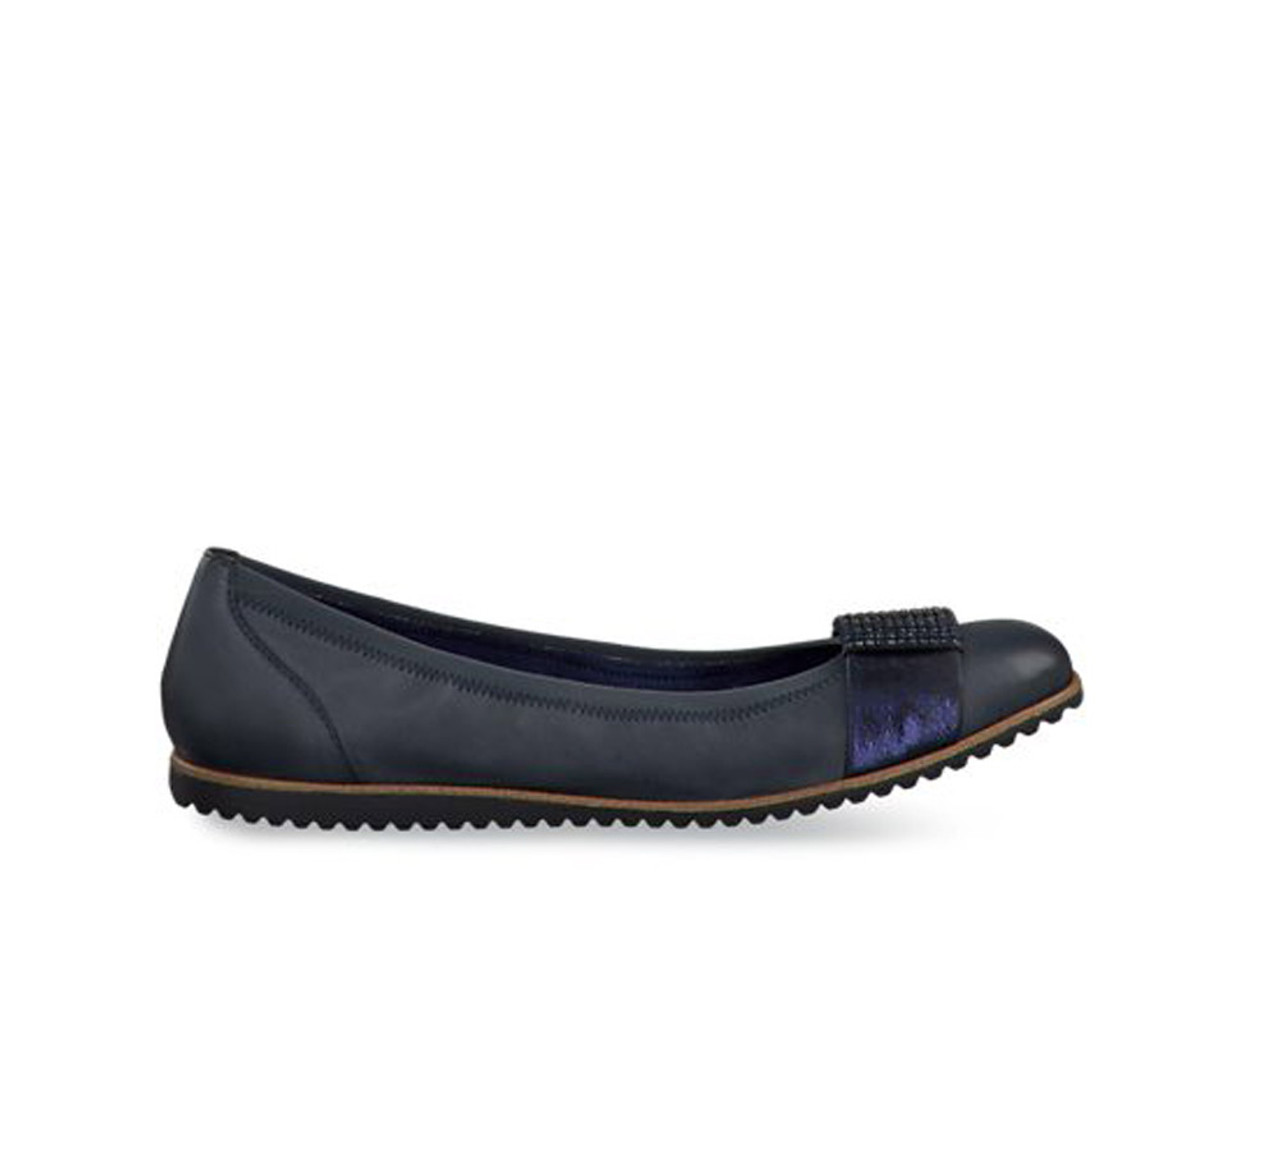 Tamaris Women's 22102 Flat - Blue | Discount Tamaris Ladies Shoes & More Shoolu.com | Shoolu.com